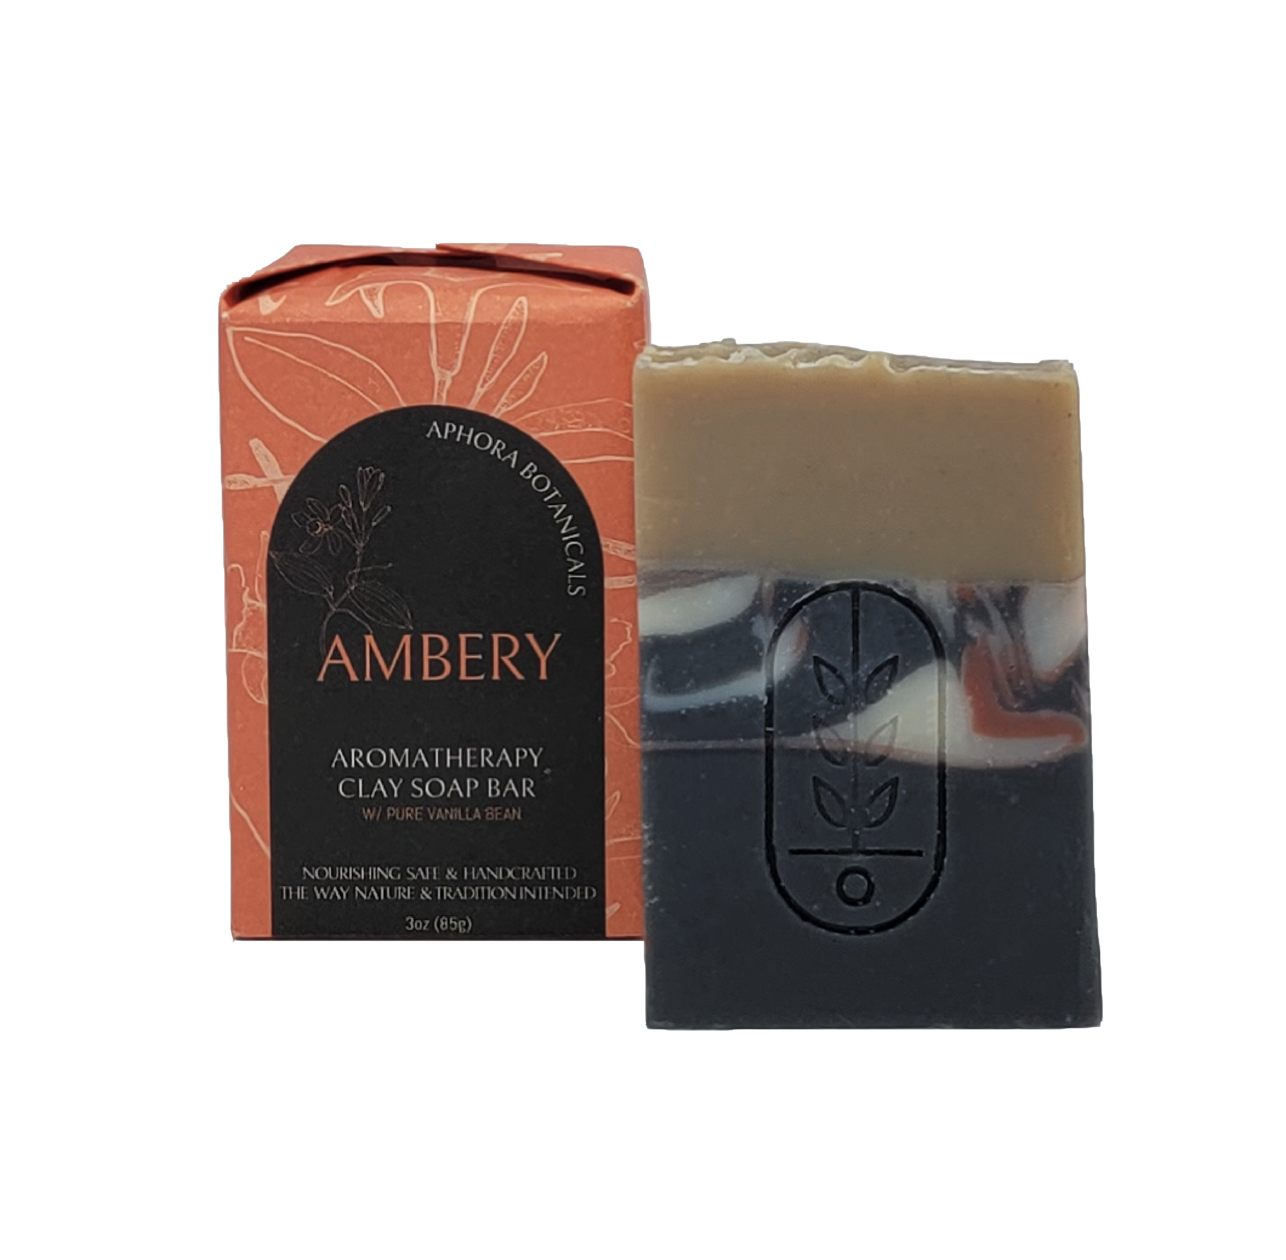 Ambery Aromatherapy Clay Soap Bar - Aphora Botanicals